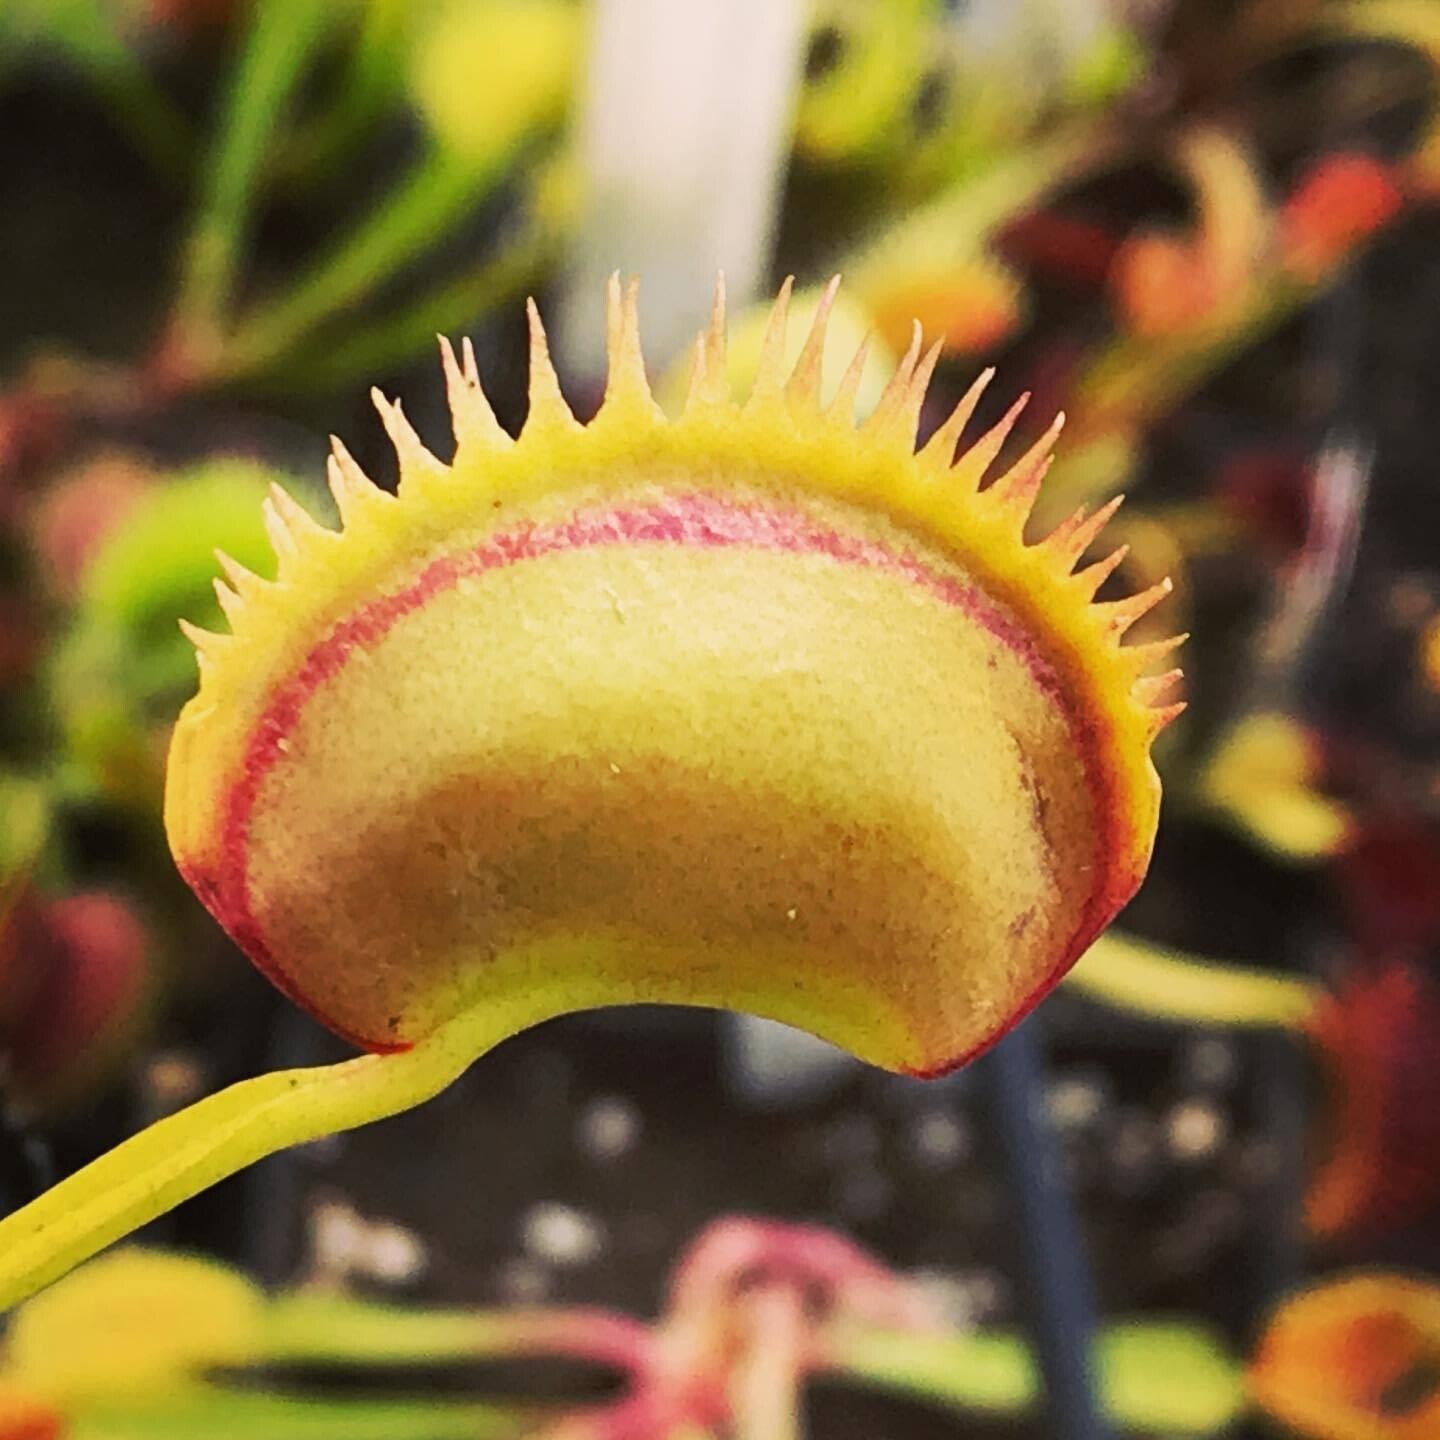 Dionaea muscipula “Fake Dracula” Venus Flytrap (small)